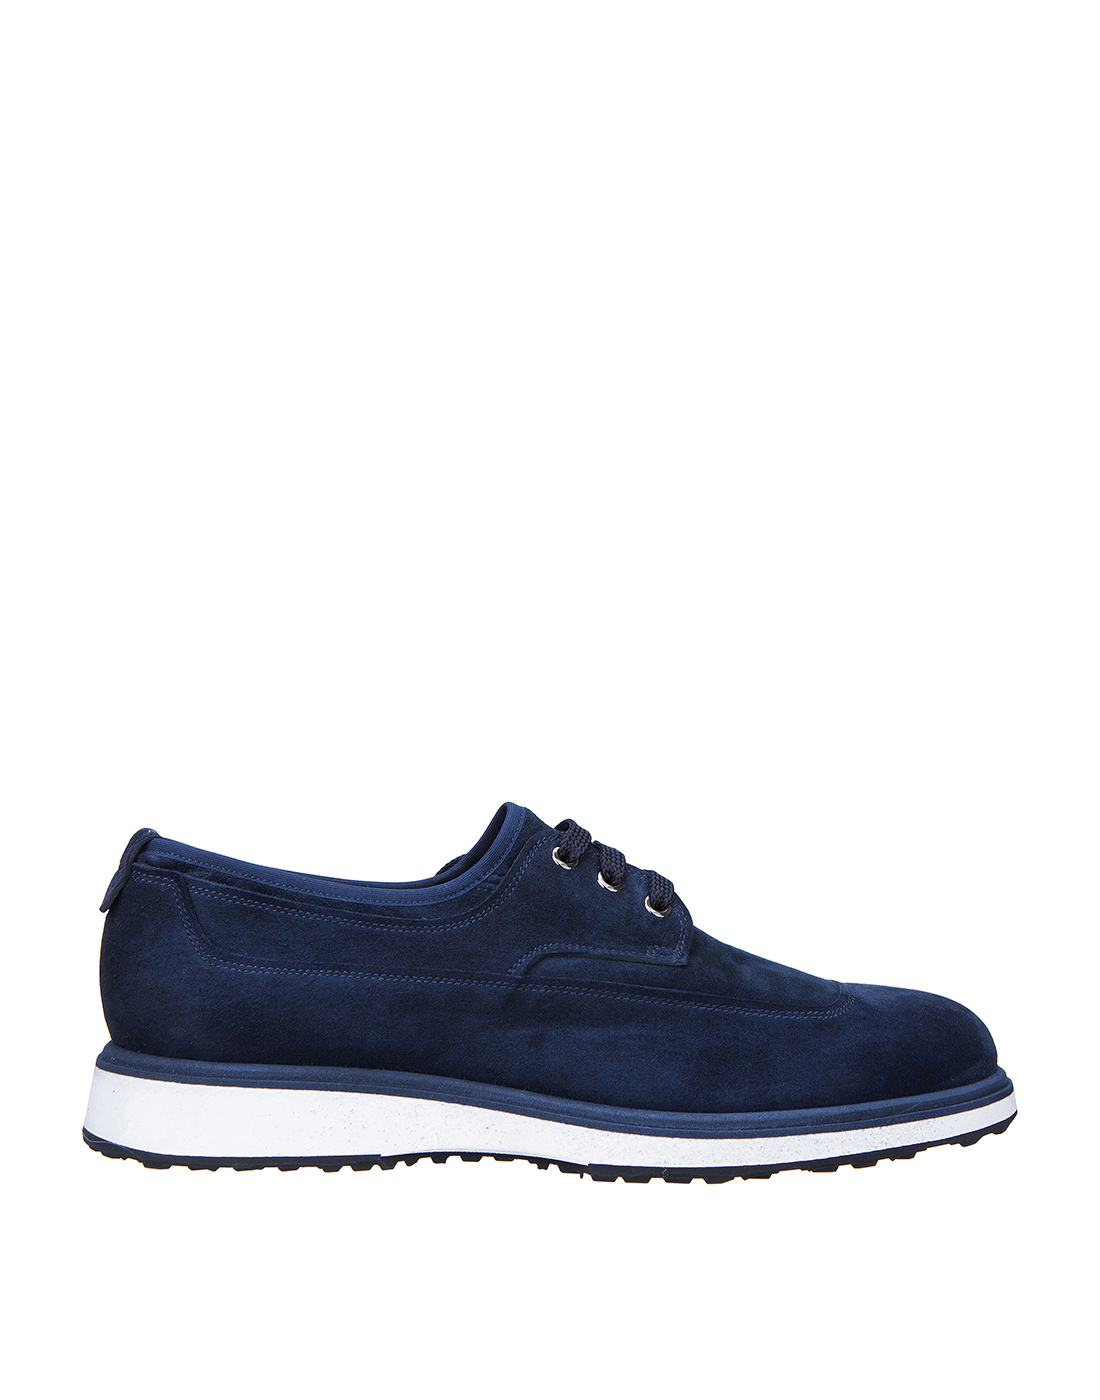 Туфли синие мужские Santoni S16506-1